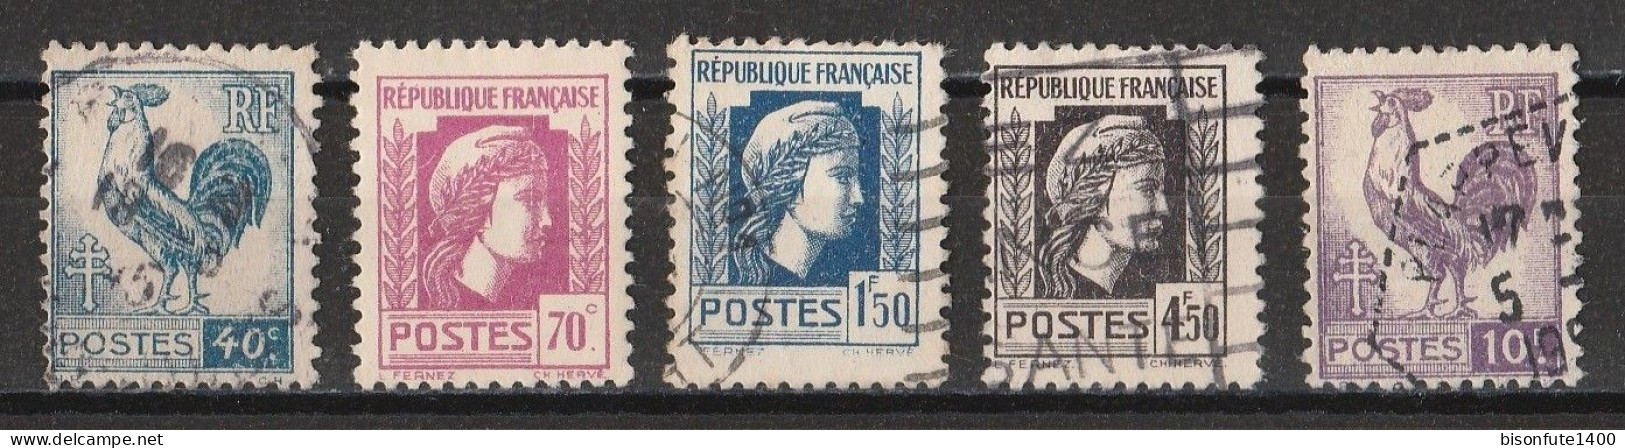 France 1944 : Timbres Yvert & Tellier N° 632 - 635 - 639 - 644 Et 646 Avec Oblitérations Rondes. - Usati